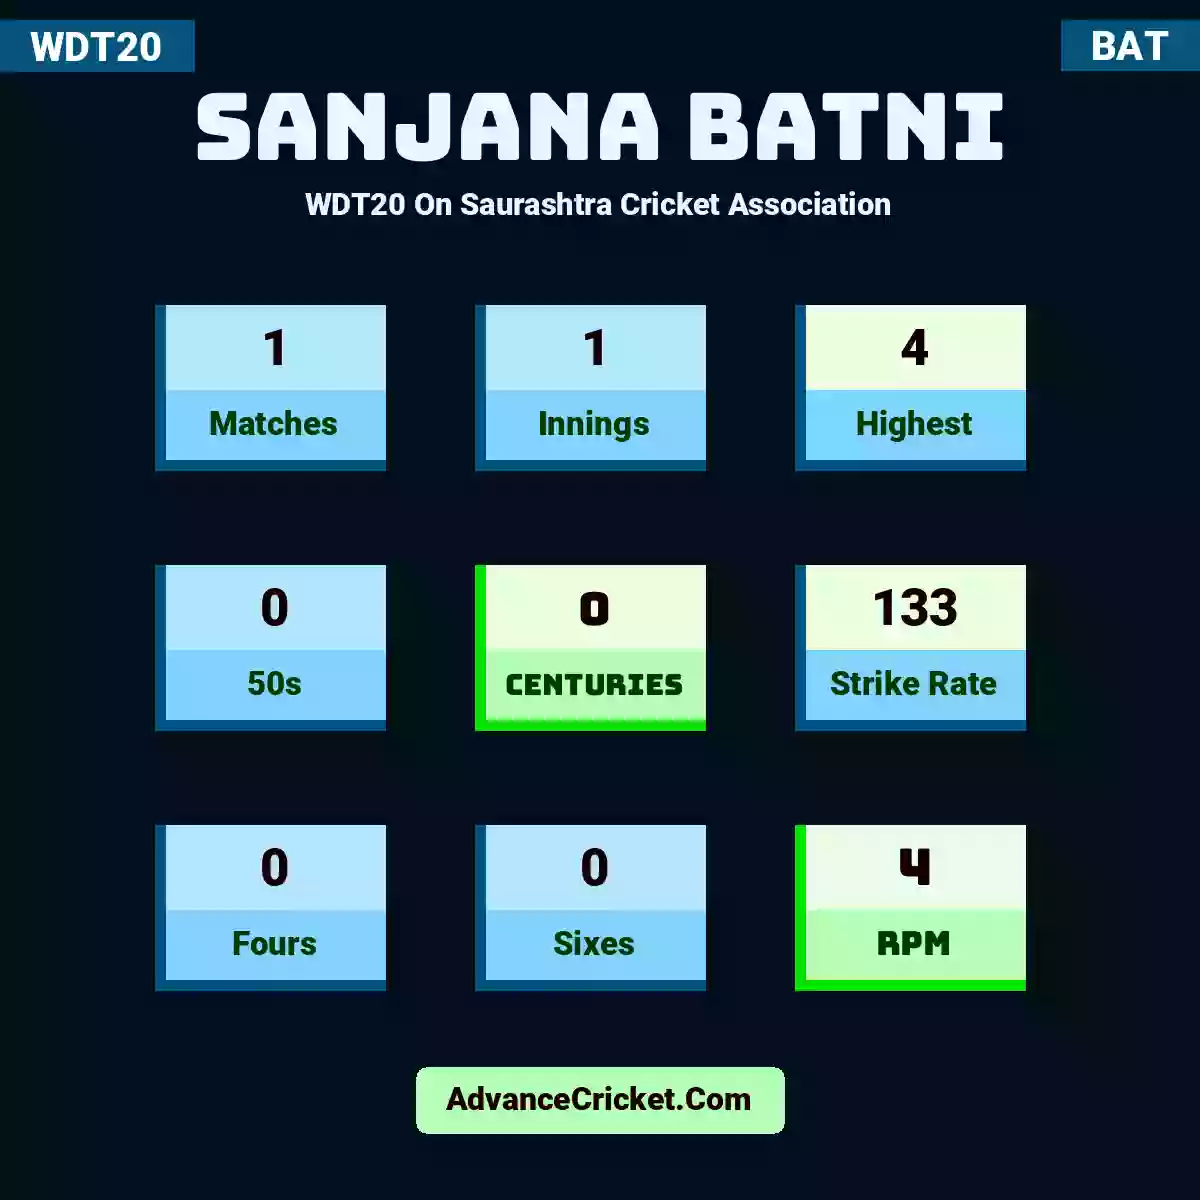 Sanjana Batni WDT20  On Saurashtra Cricket Association, Sanjana Batni played 1 matches, scored 4 runs as highest, 0 half-centuries, and 0 centuries, with a strike rate of 133. S.Batni hit 0 fours and 0 sixes, with an RPM of 4.